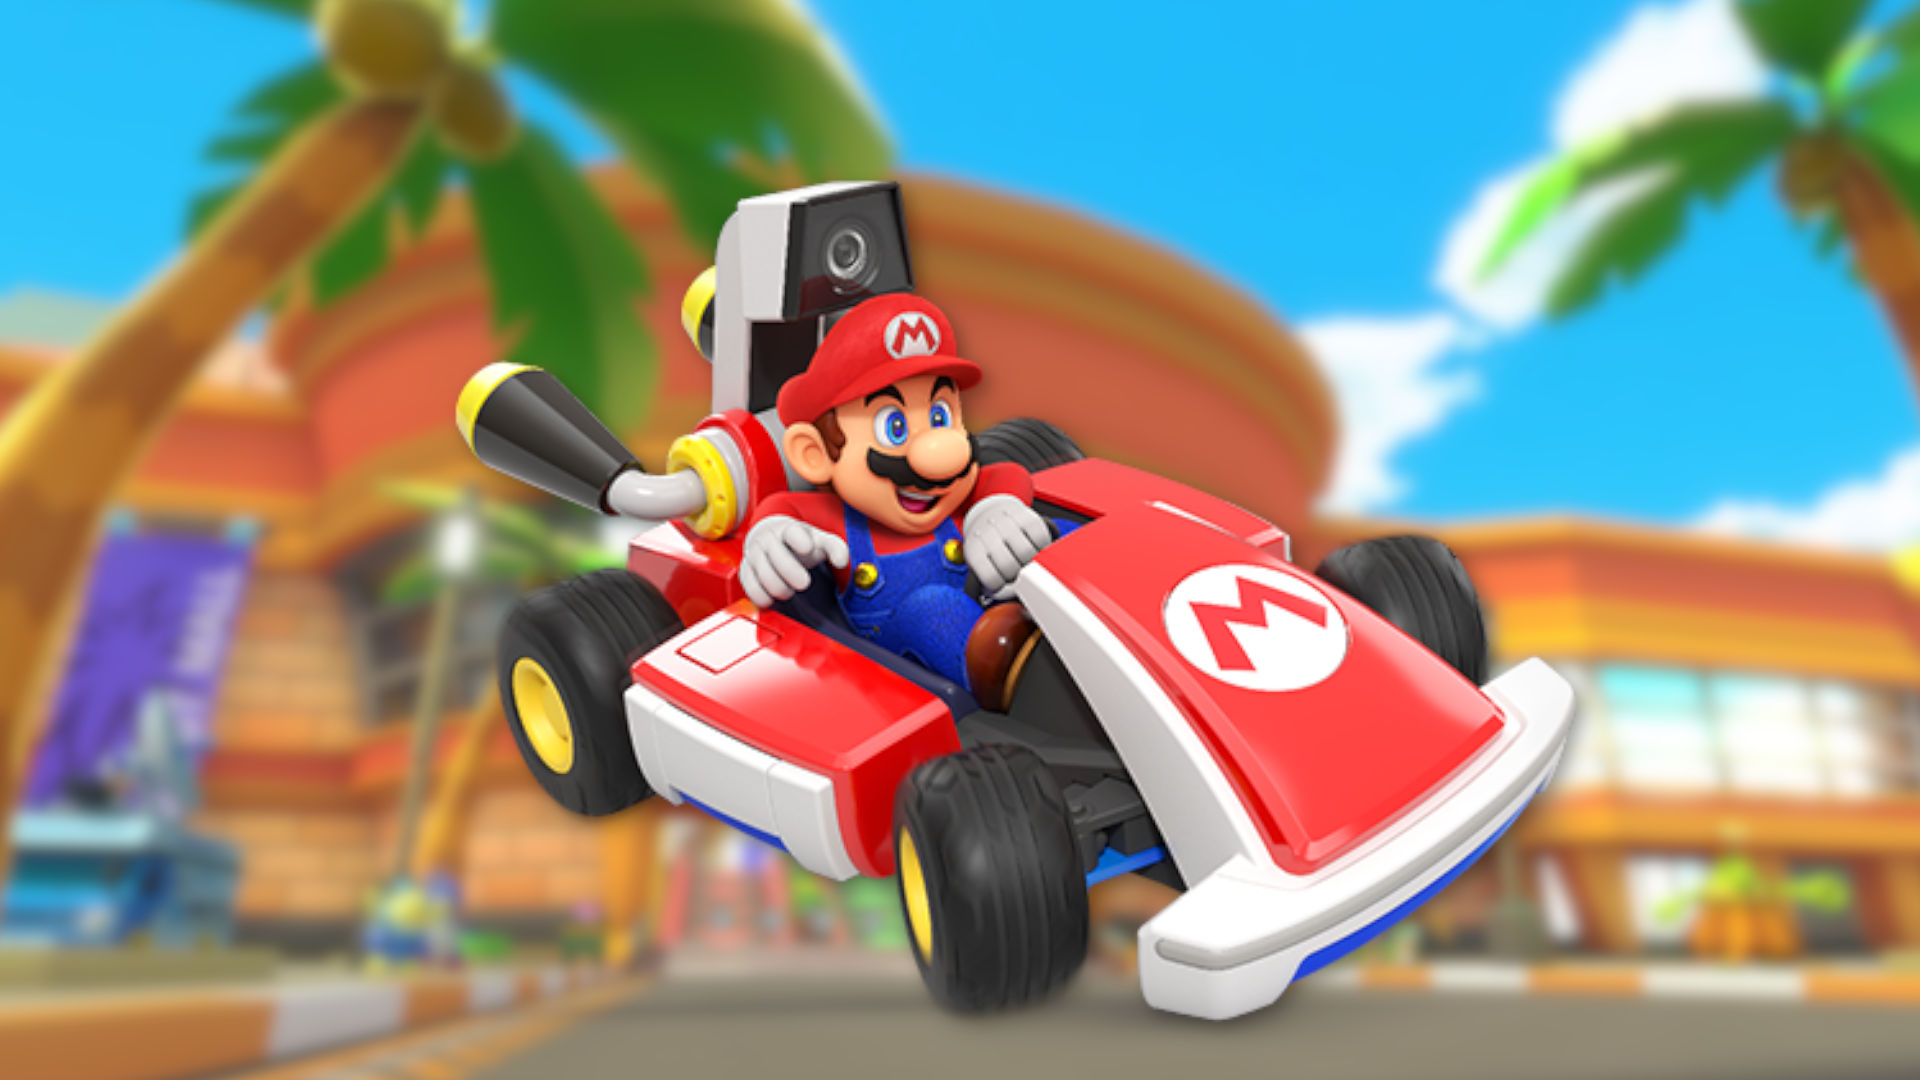 Mario Kart’s best courses picked by Pocket Tactics Pocket Tactics